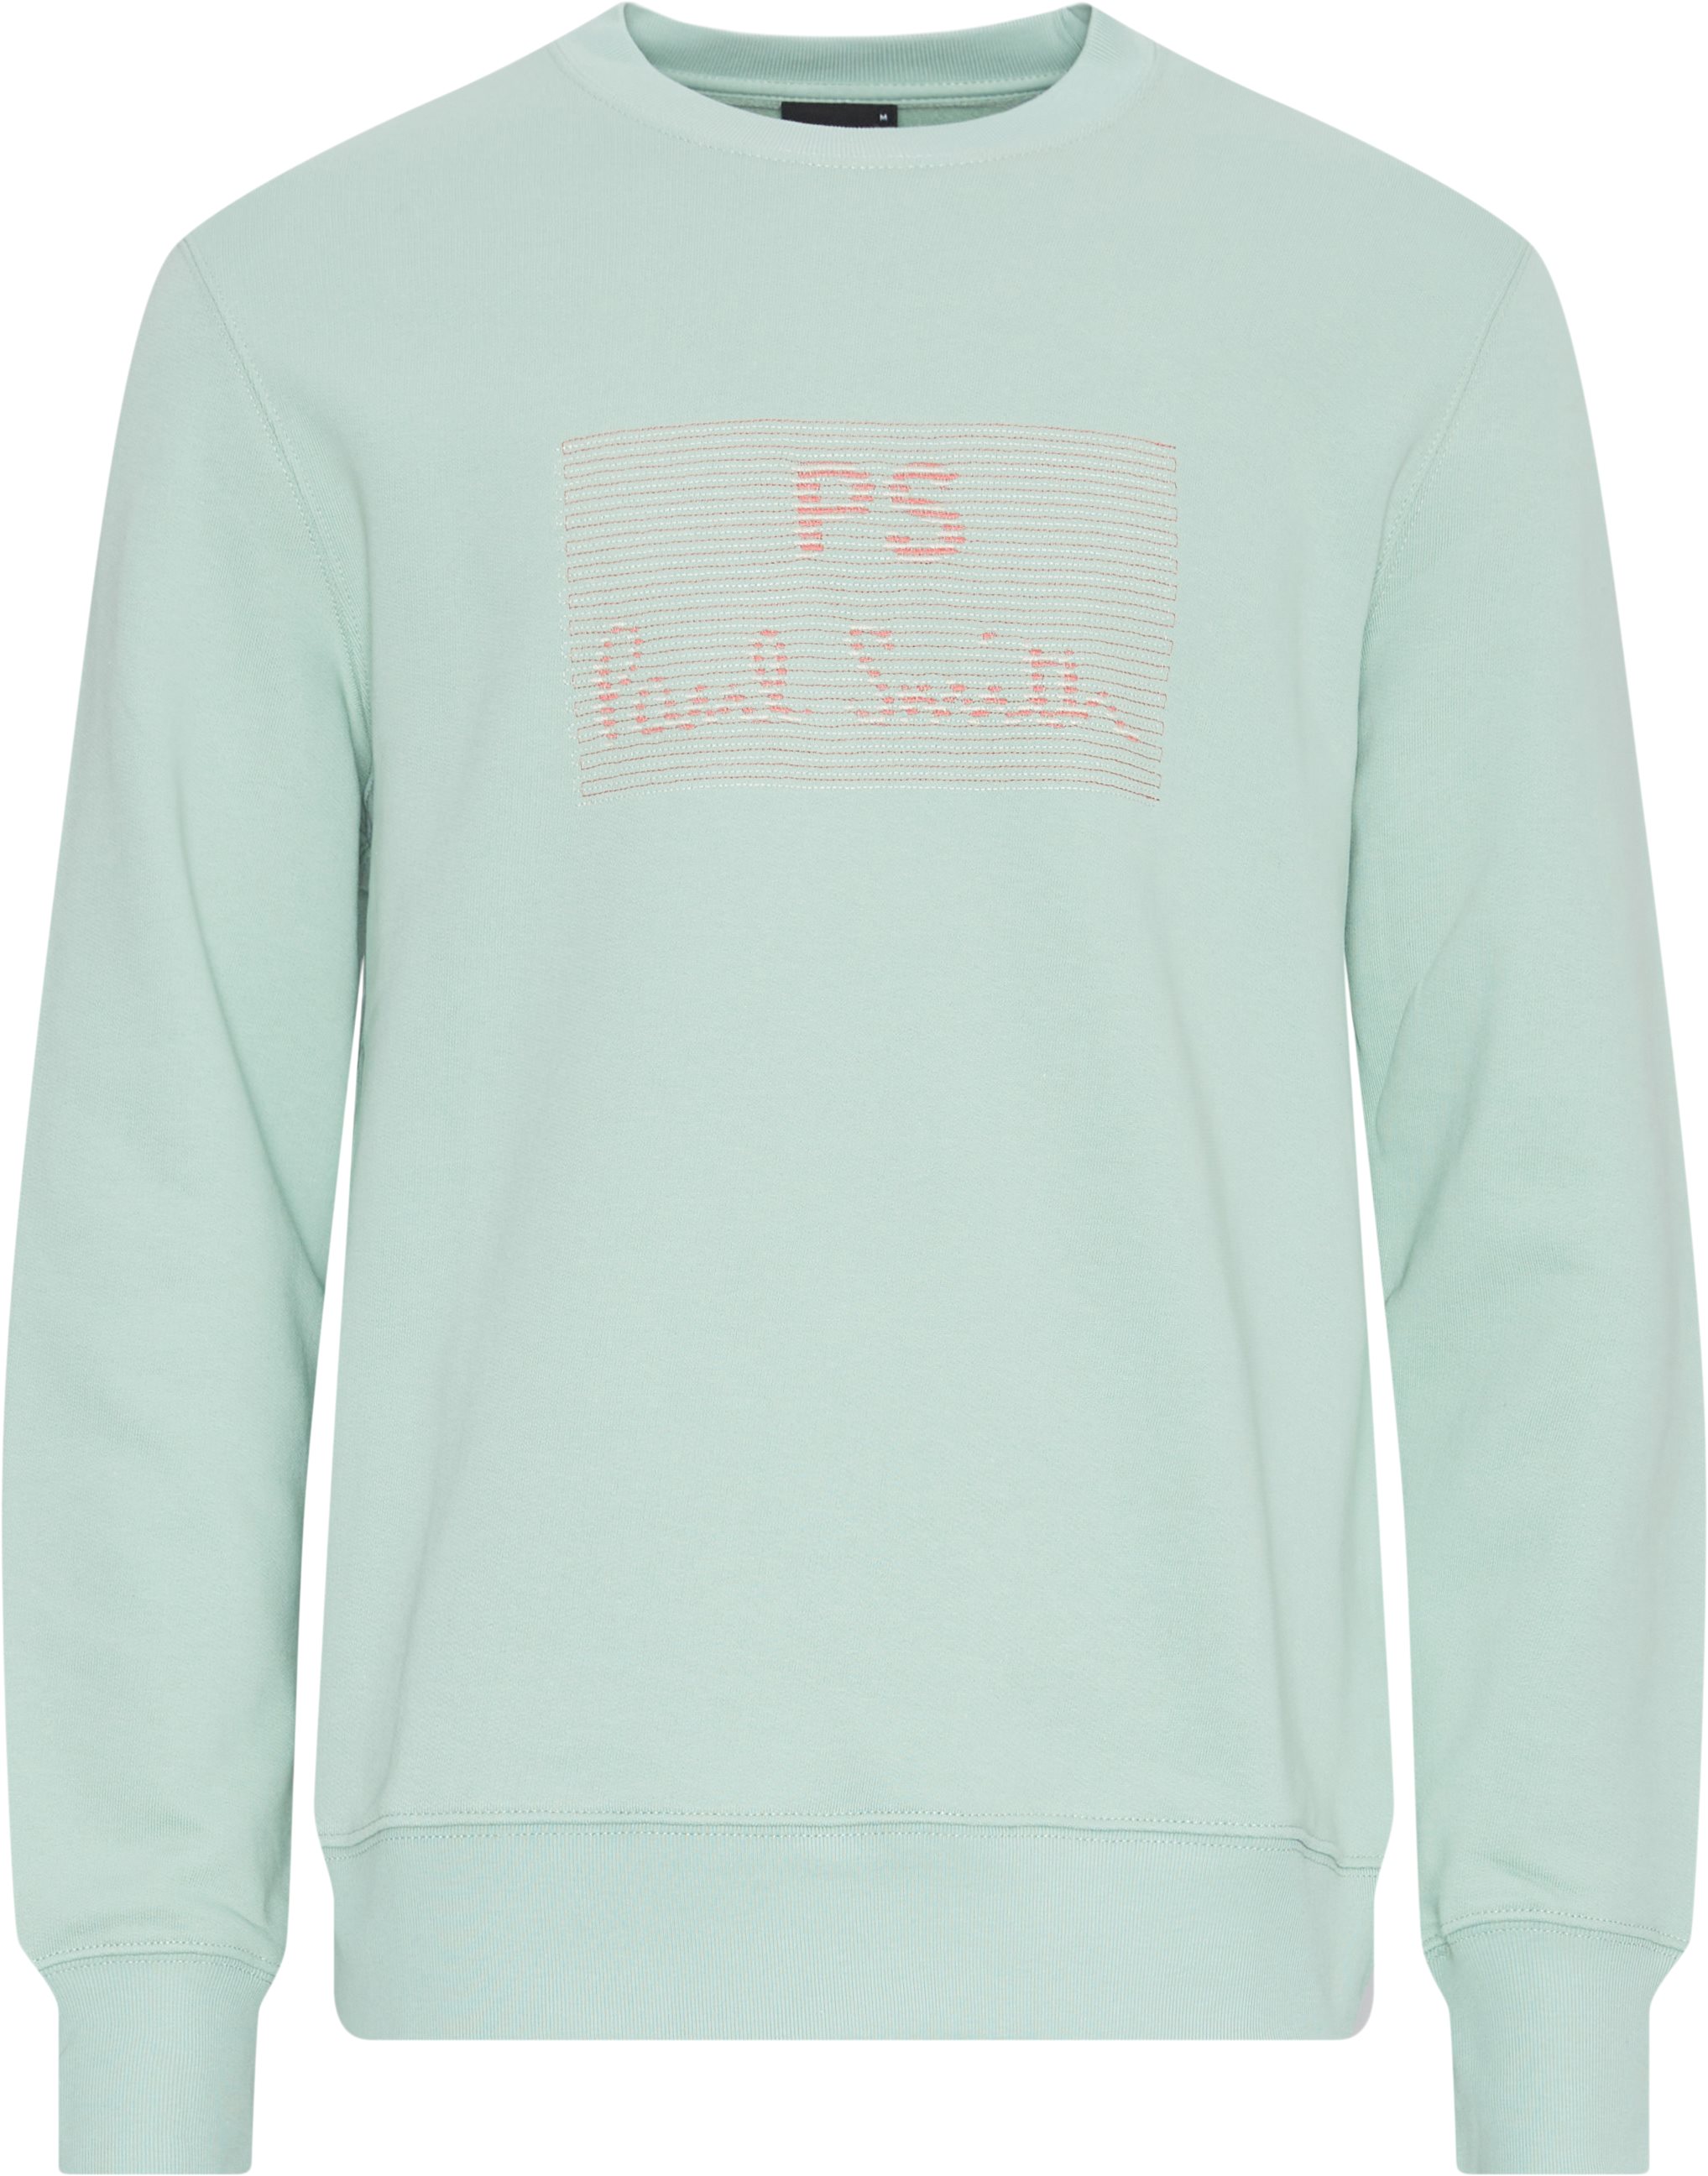 PS Paul Smith Sweatshirts 668UE MP4372 Turquoise